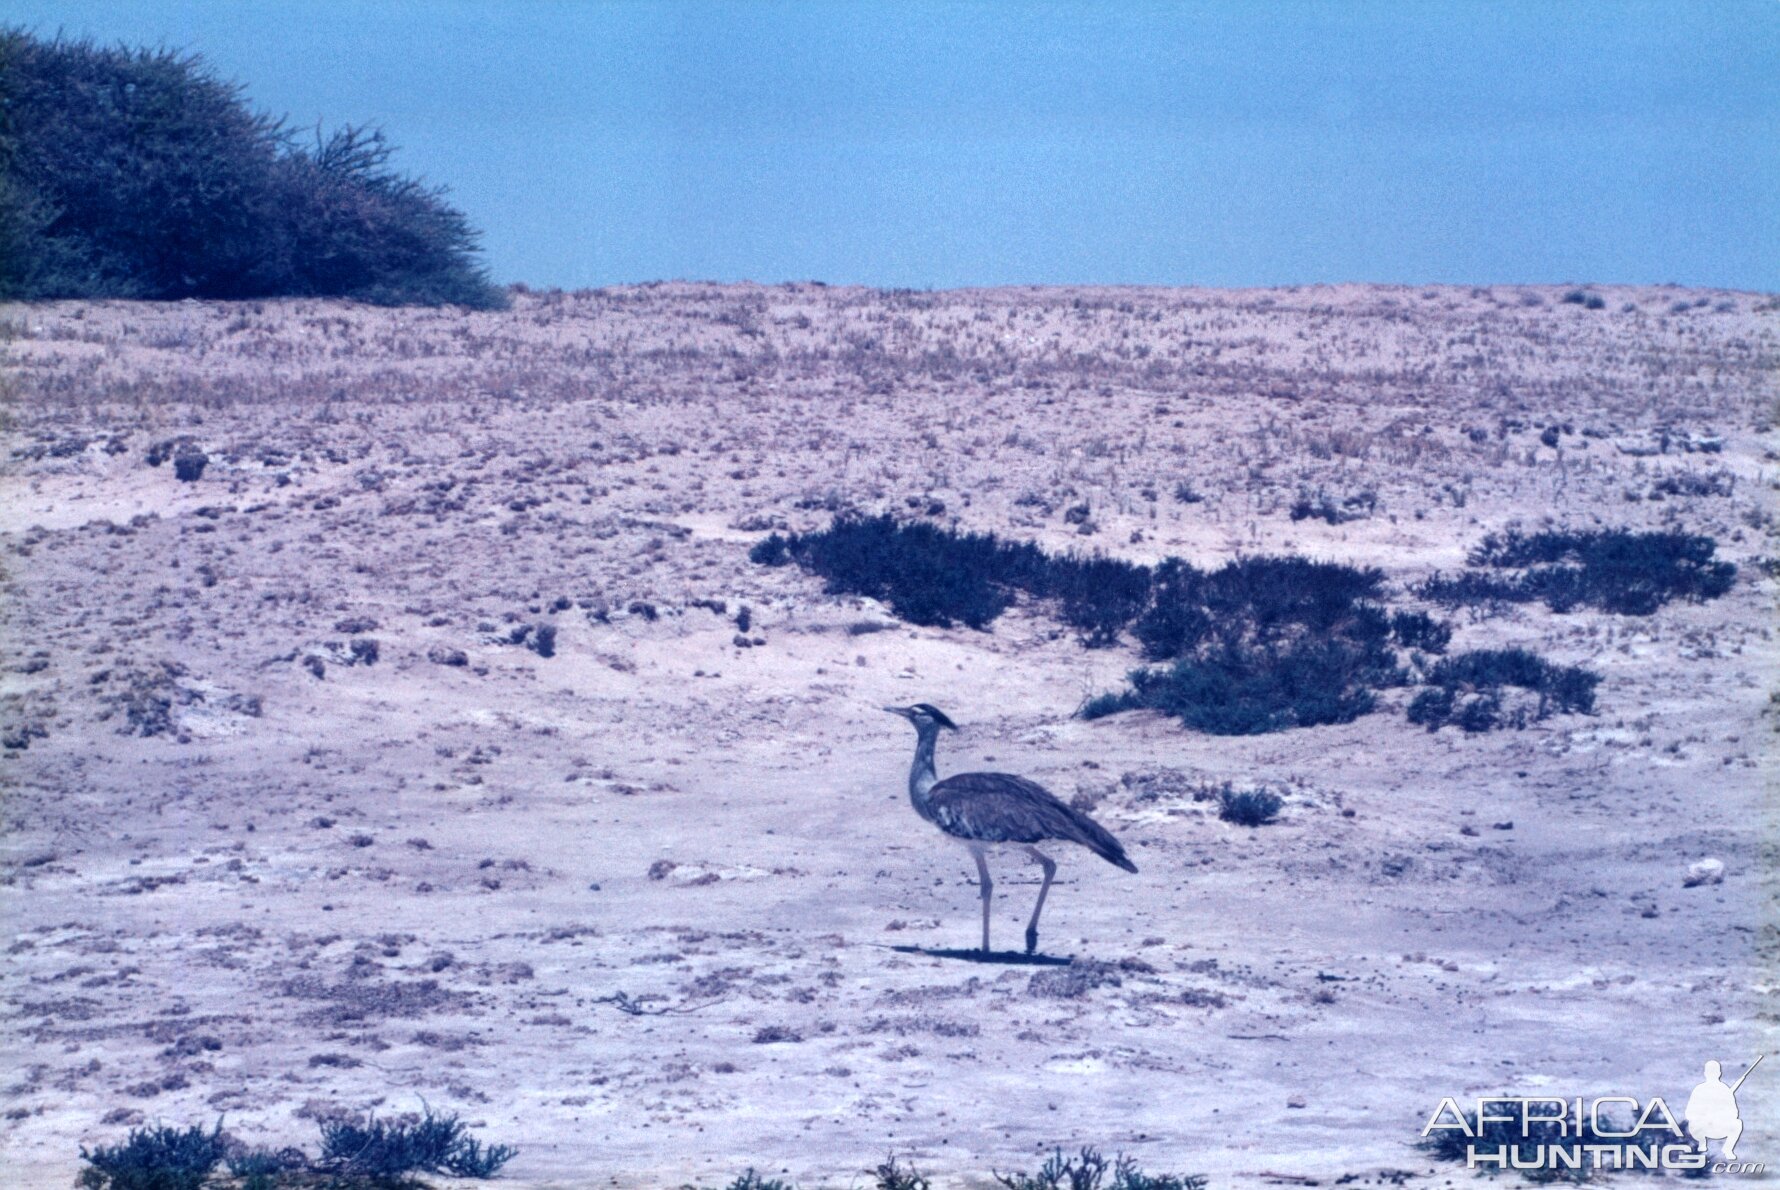 Secretary Bird at Etosha National Park in Namibia